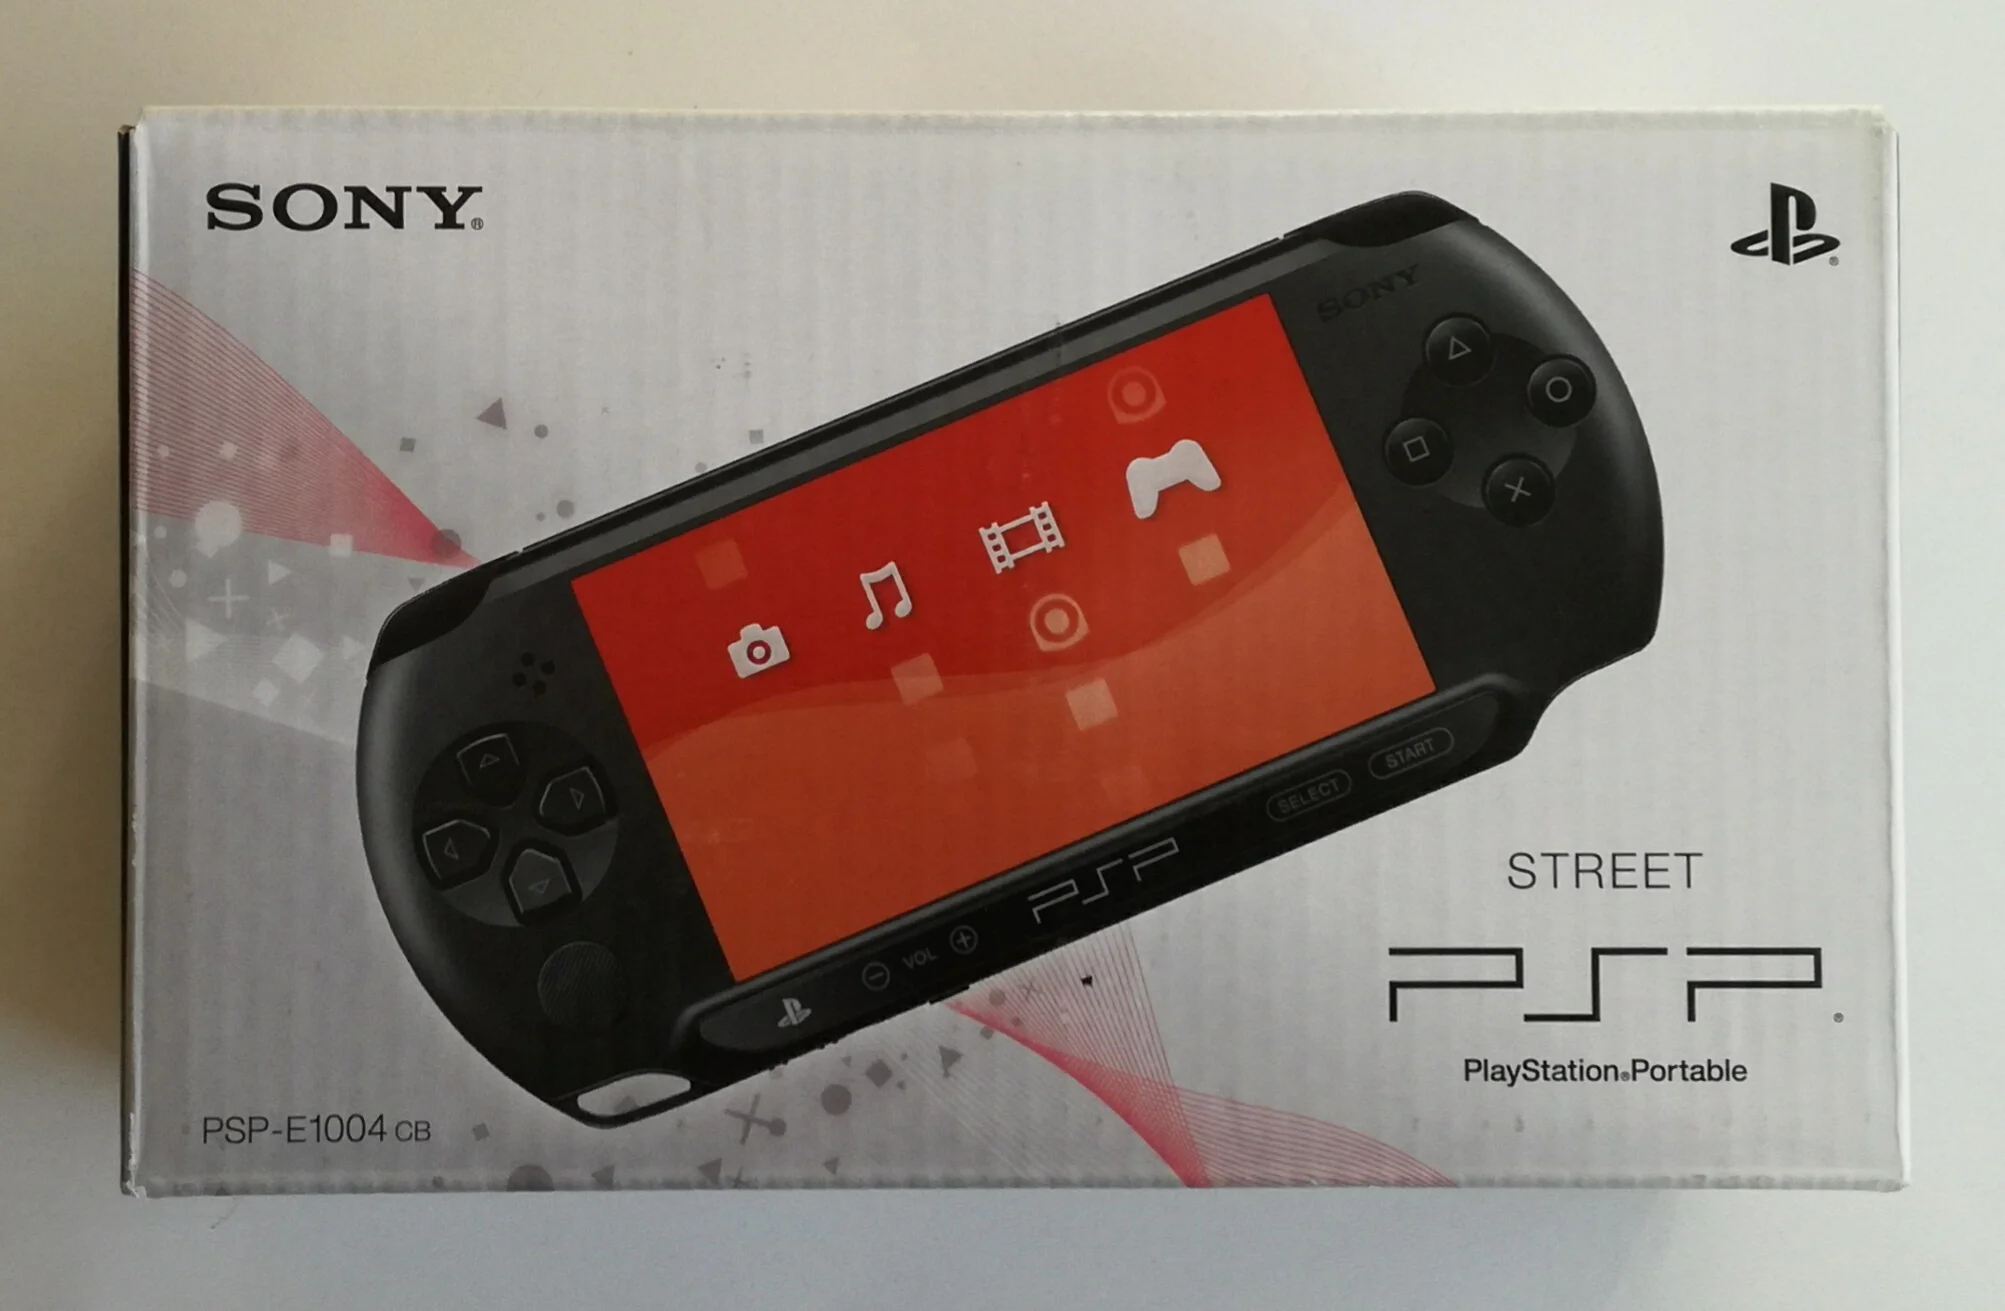 Sony PSP Street E1004 Geronimo Stilton - Consolevariations